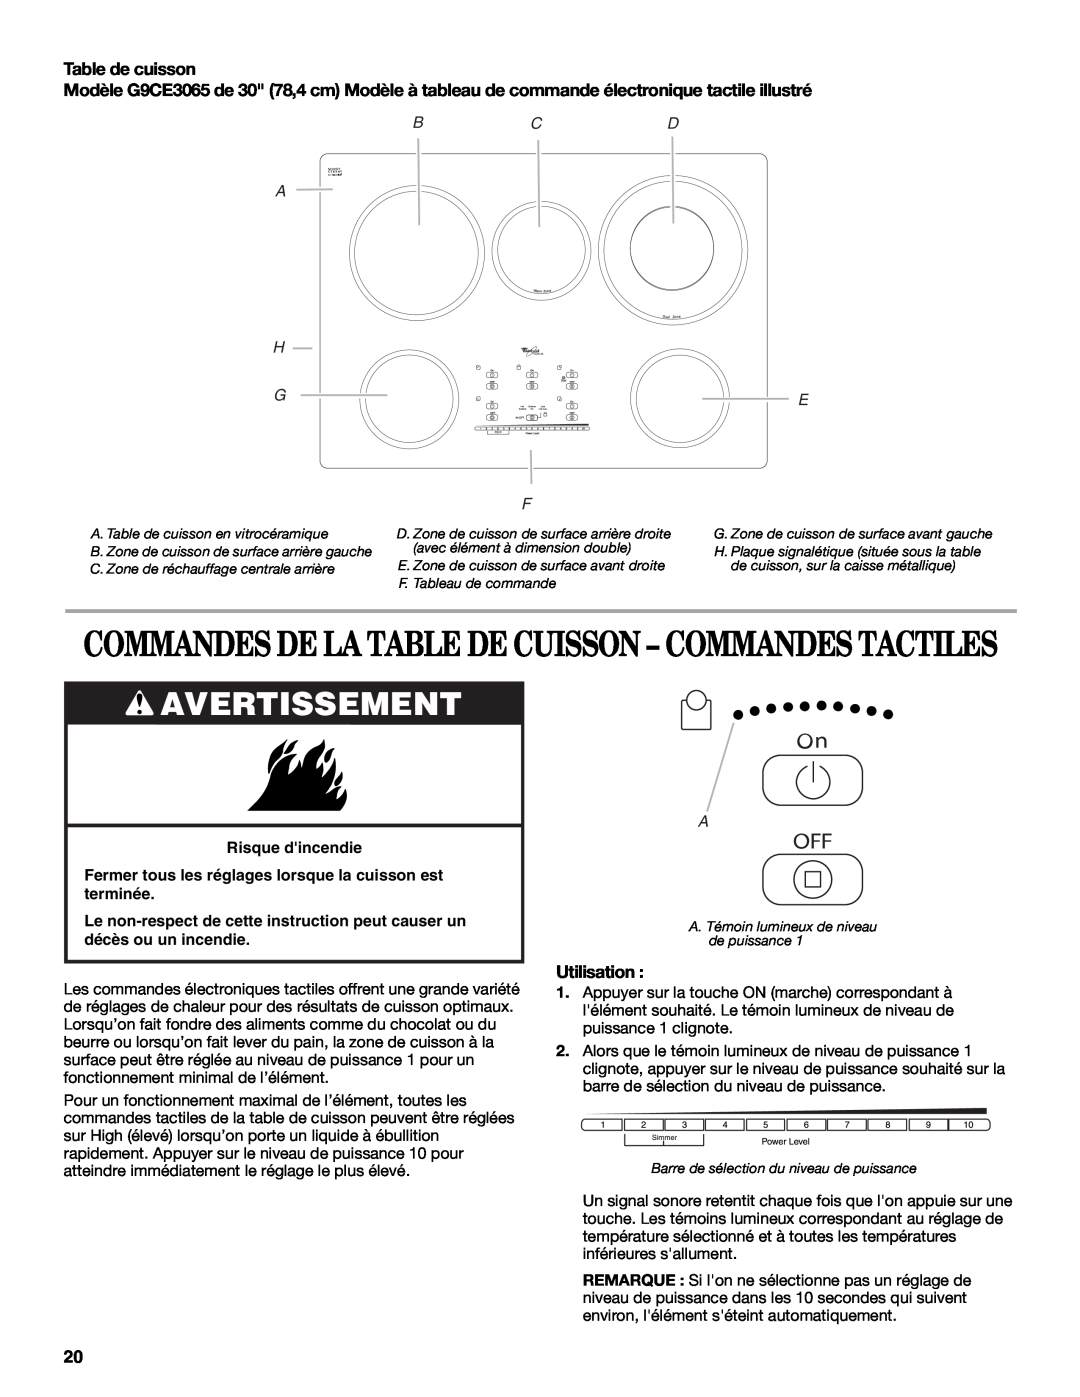 Whirlpool G9CE3675XB manual Avertissement, Table de cuisson, Utilisation, Bcd A 